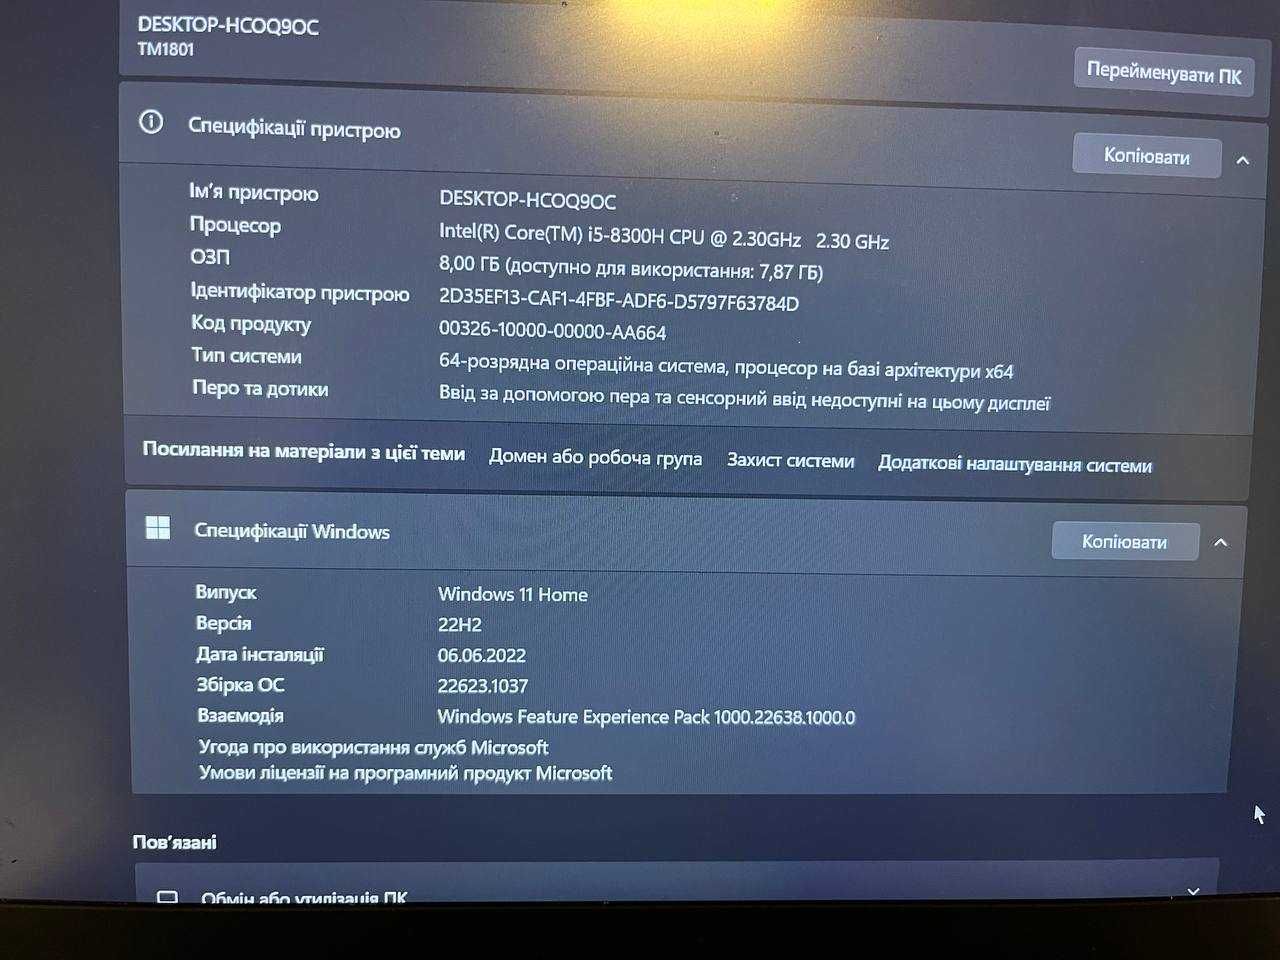 Xiaomi Gaming Laptop 1050Ti , IntelCore i5-8300 2.20GHz